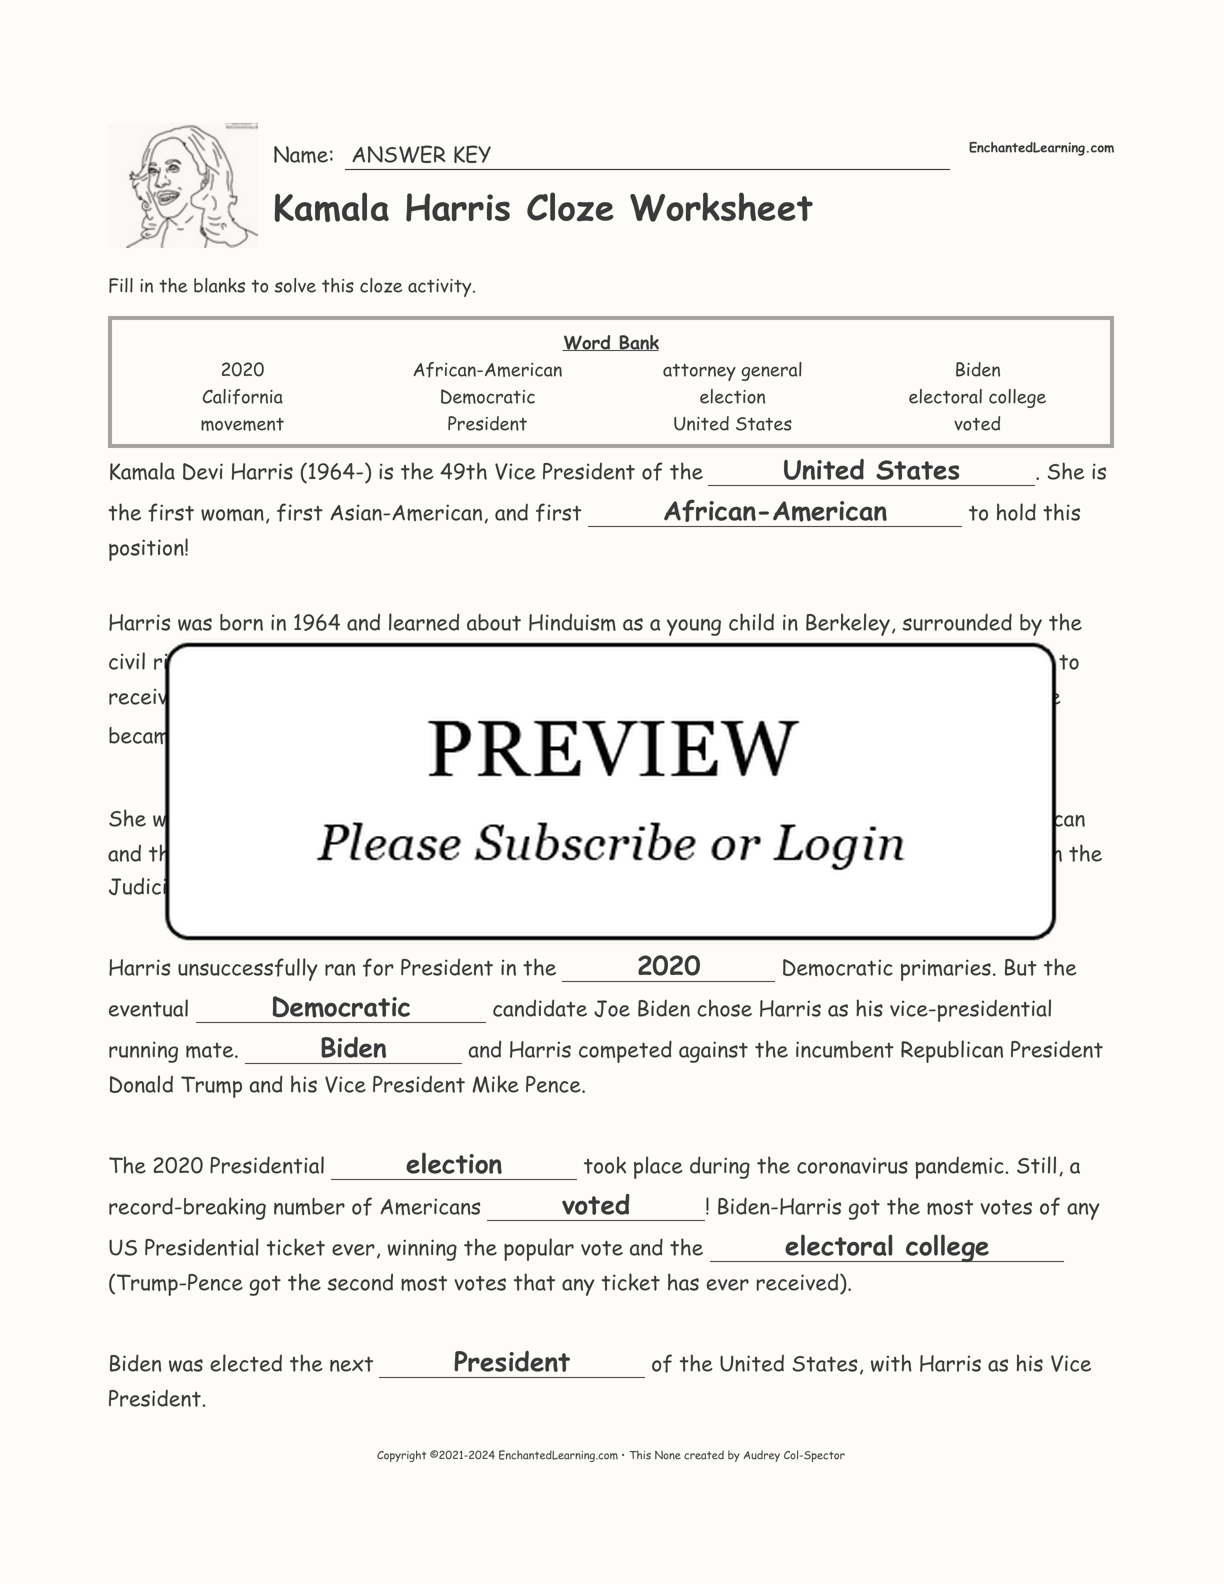 Kamala Harris Cloze Worksheet interactive worksheet page 2